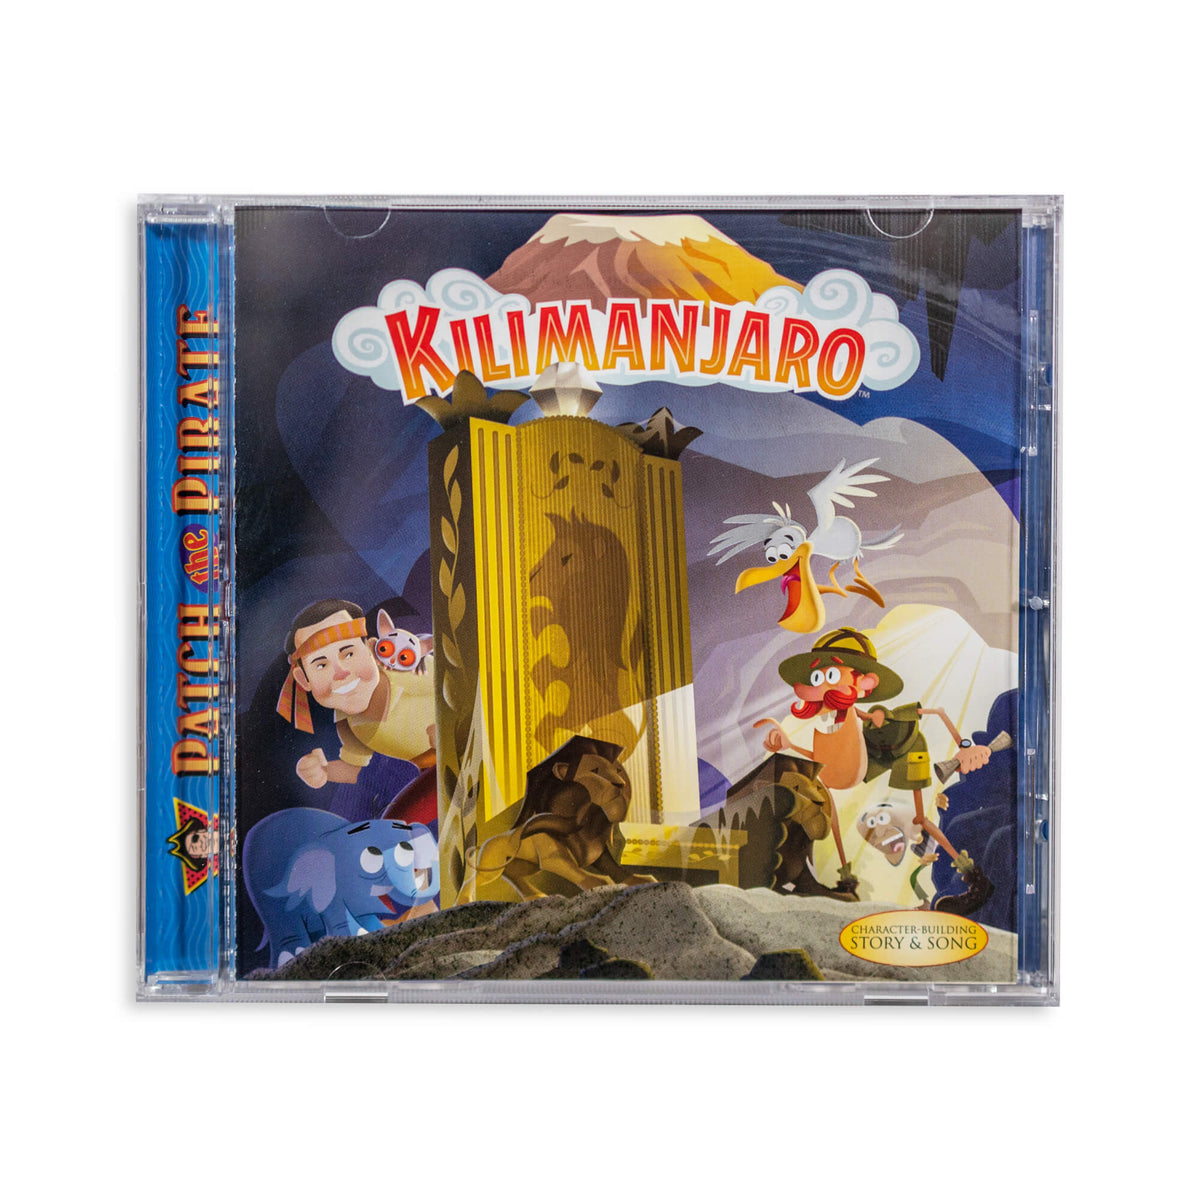 Kilimanjaro Musical Drama CD